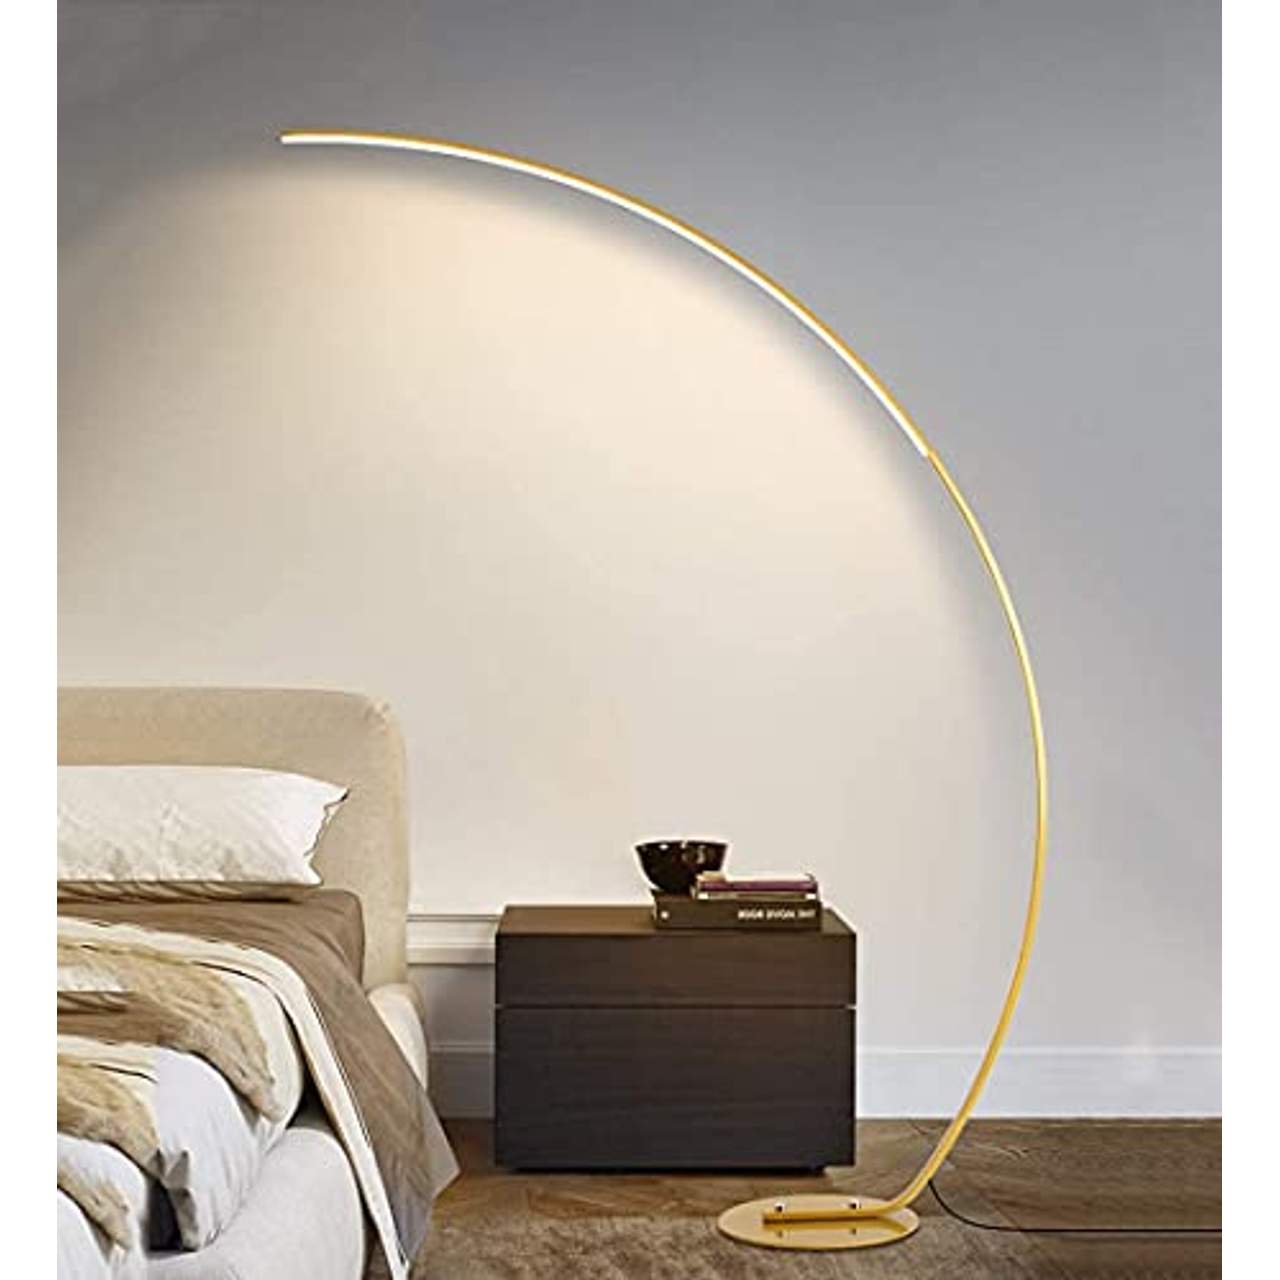 LED Bogenlampe Dimmbar Wohnzimmer Stehlampe Gold